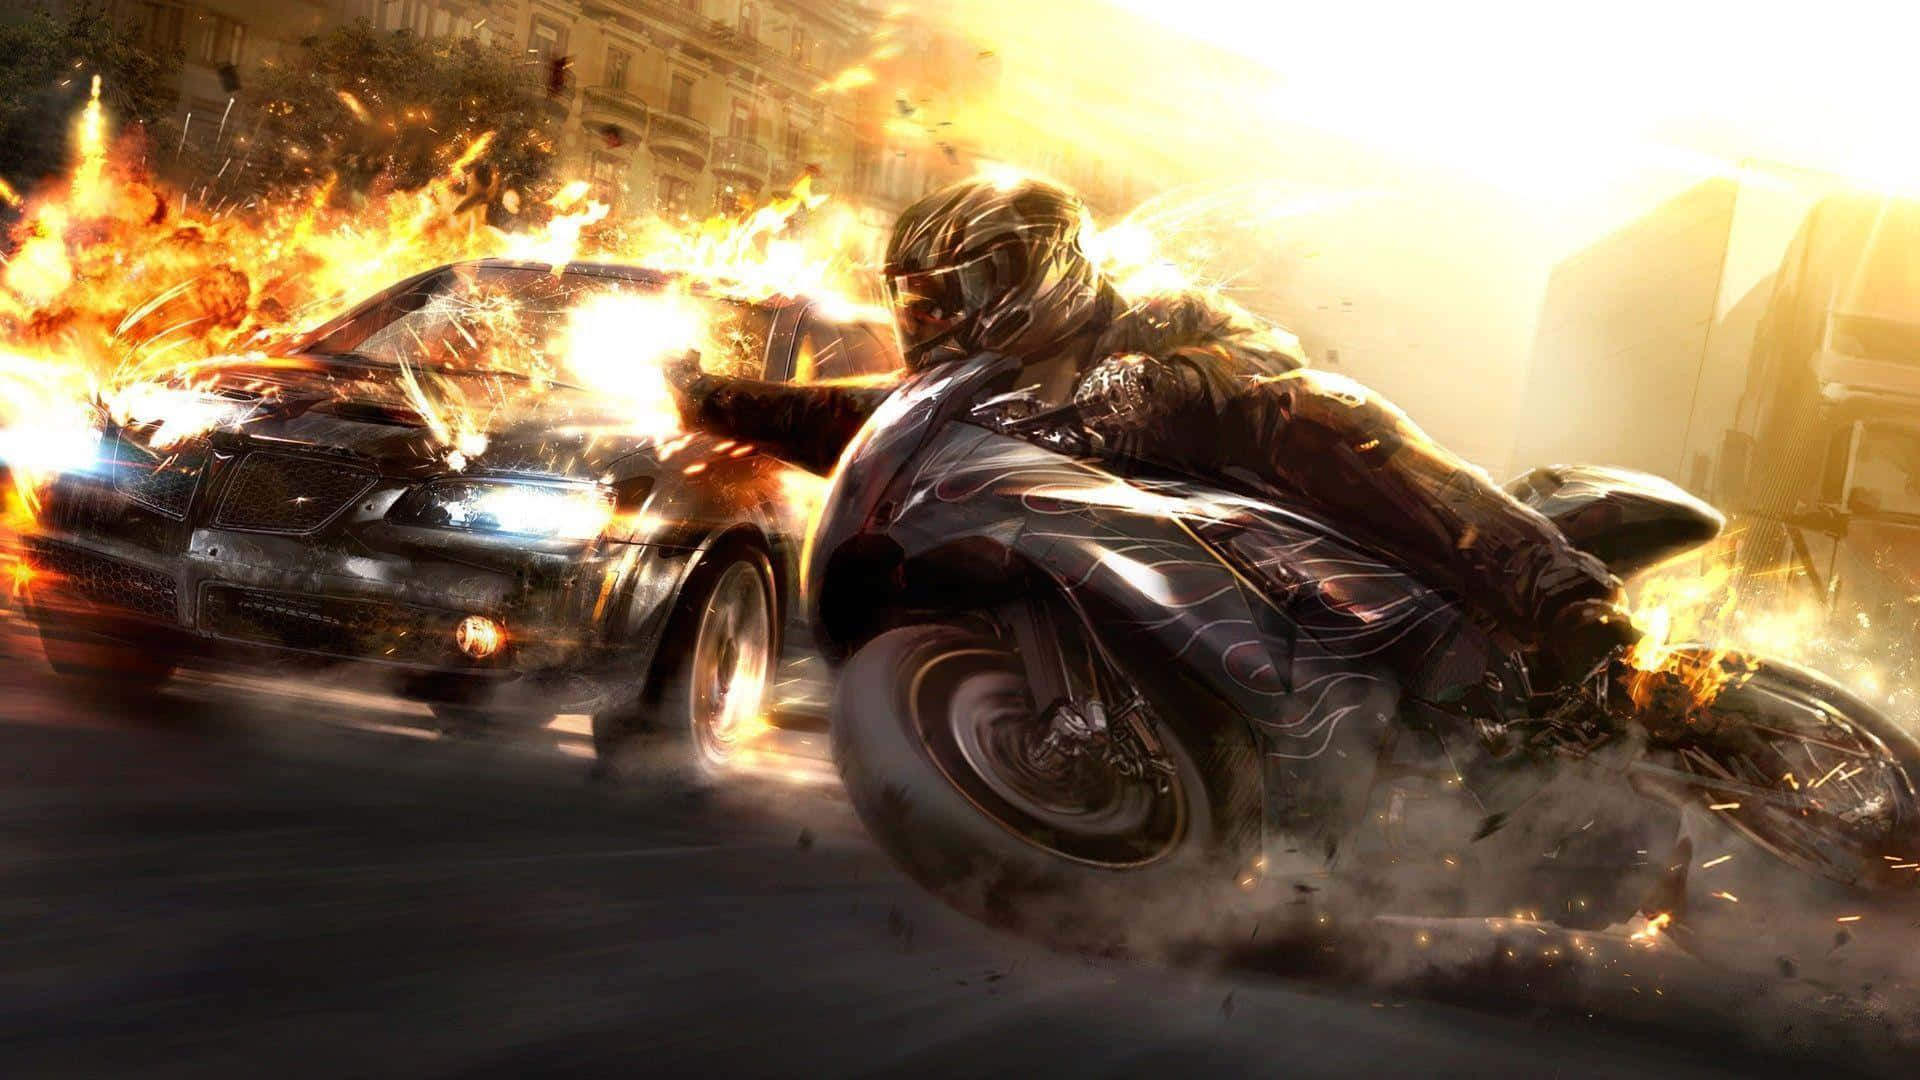 En motorcykel er i brand Wallpaper